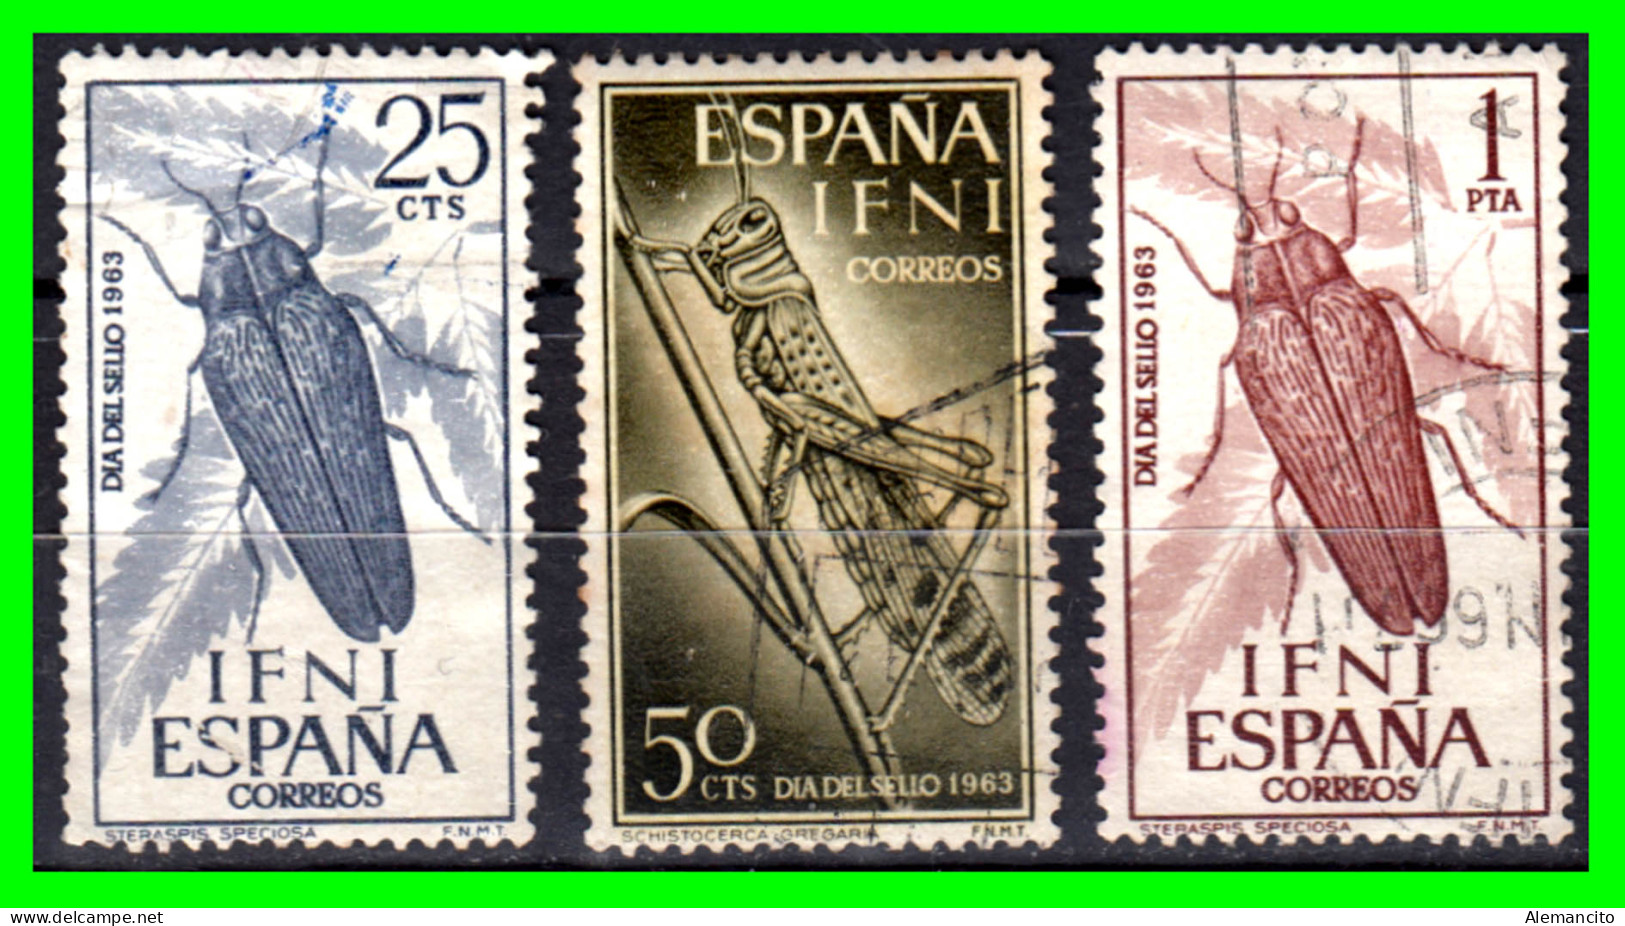 ESPAÑA COLONIAS ESPAÑOLAS ( IFNI ESPAÑOL AFRICA ) SERIE DE SELLOS AÑO 1964 DIA DEL SELLO - NUEVOS - - Ifni